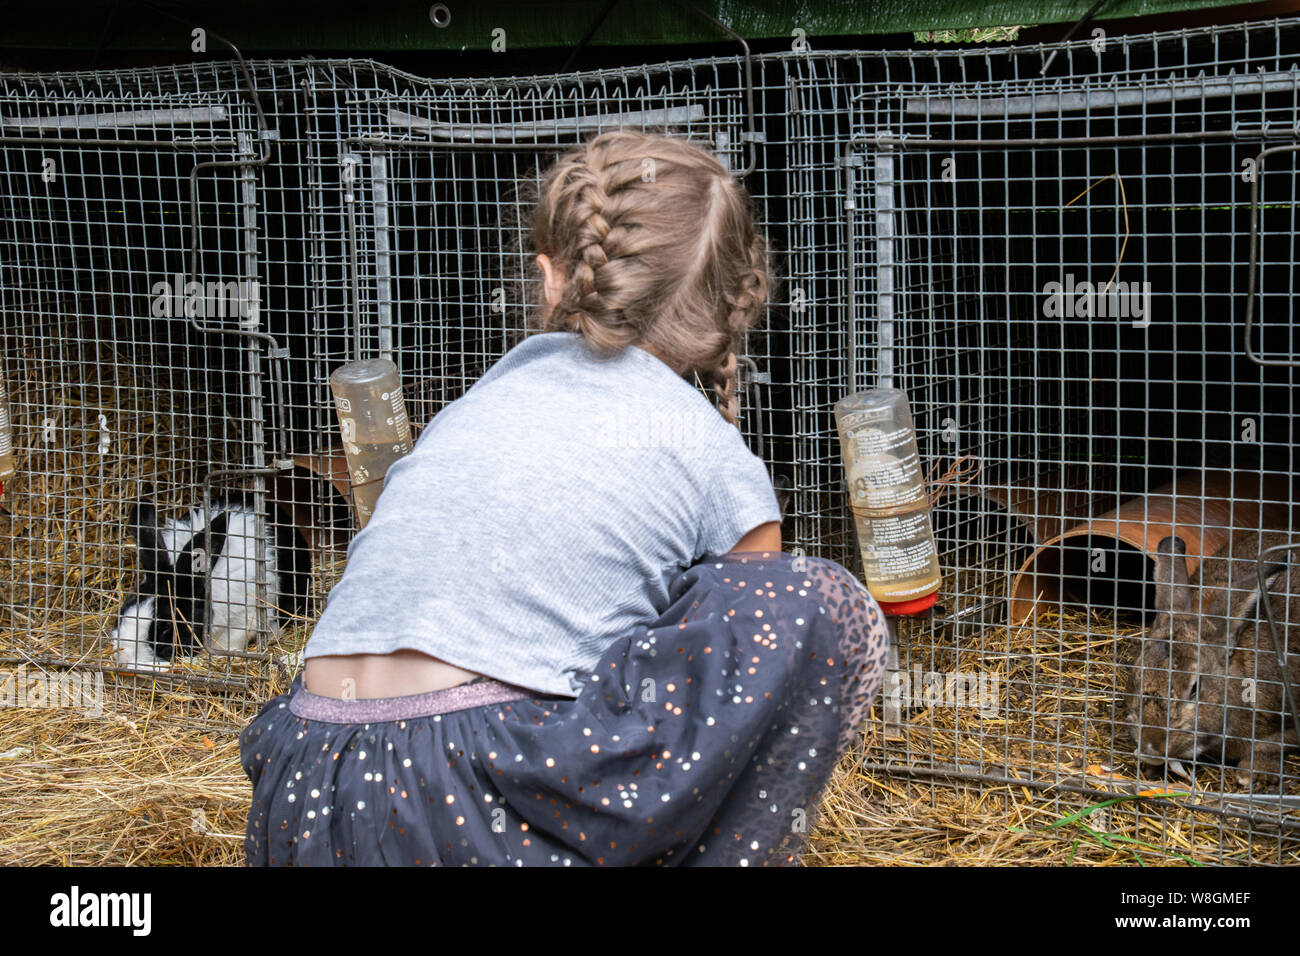 Girl feeding bunnies Stock Photo